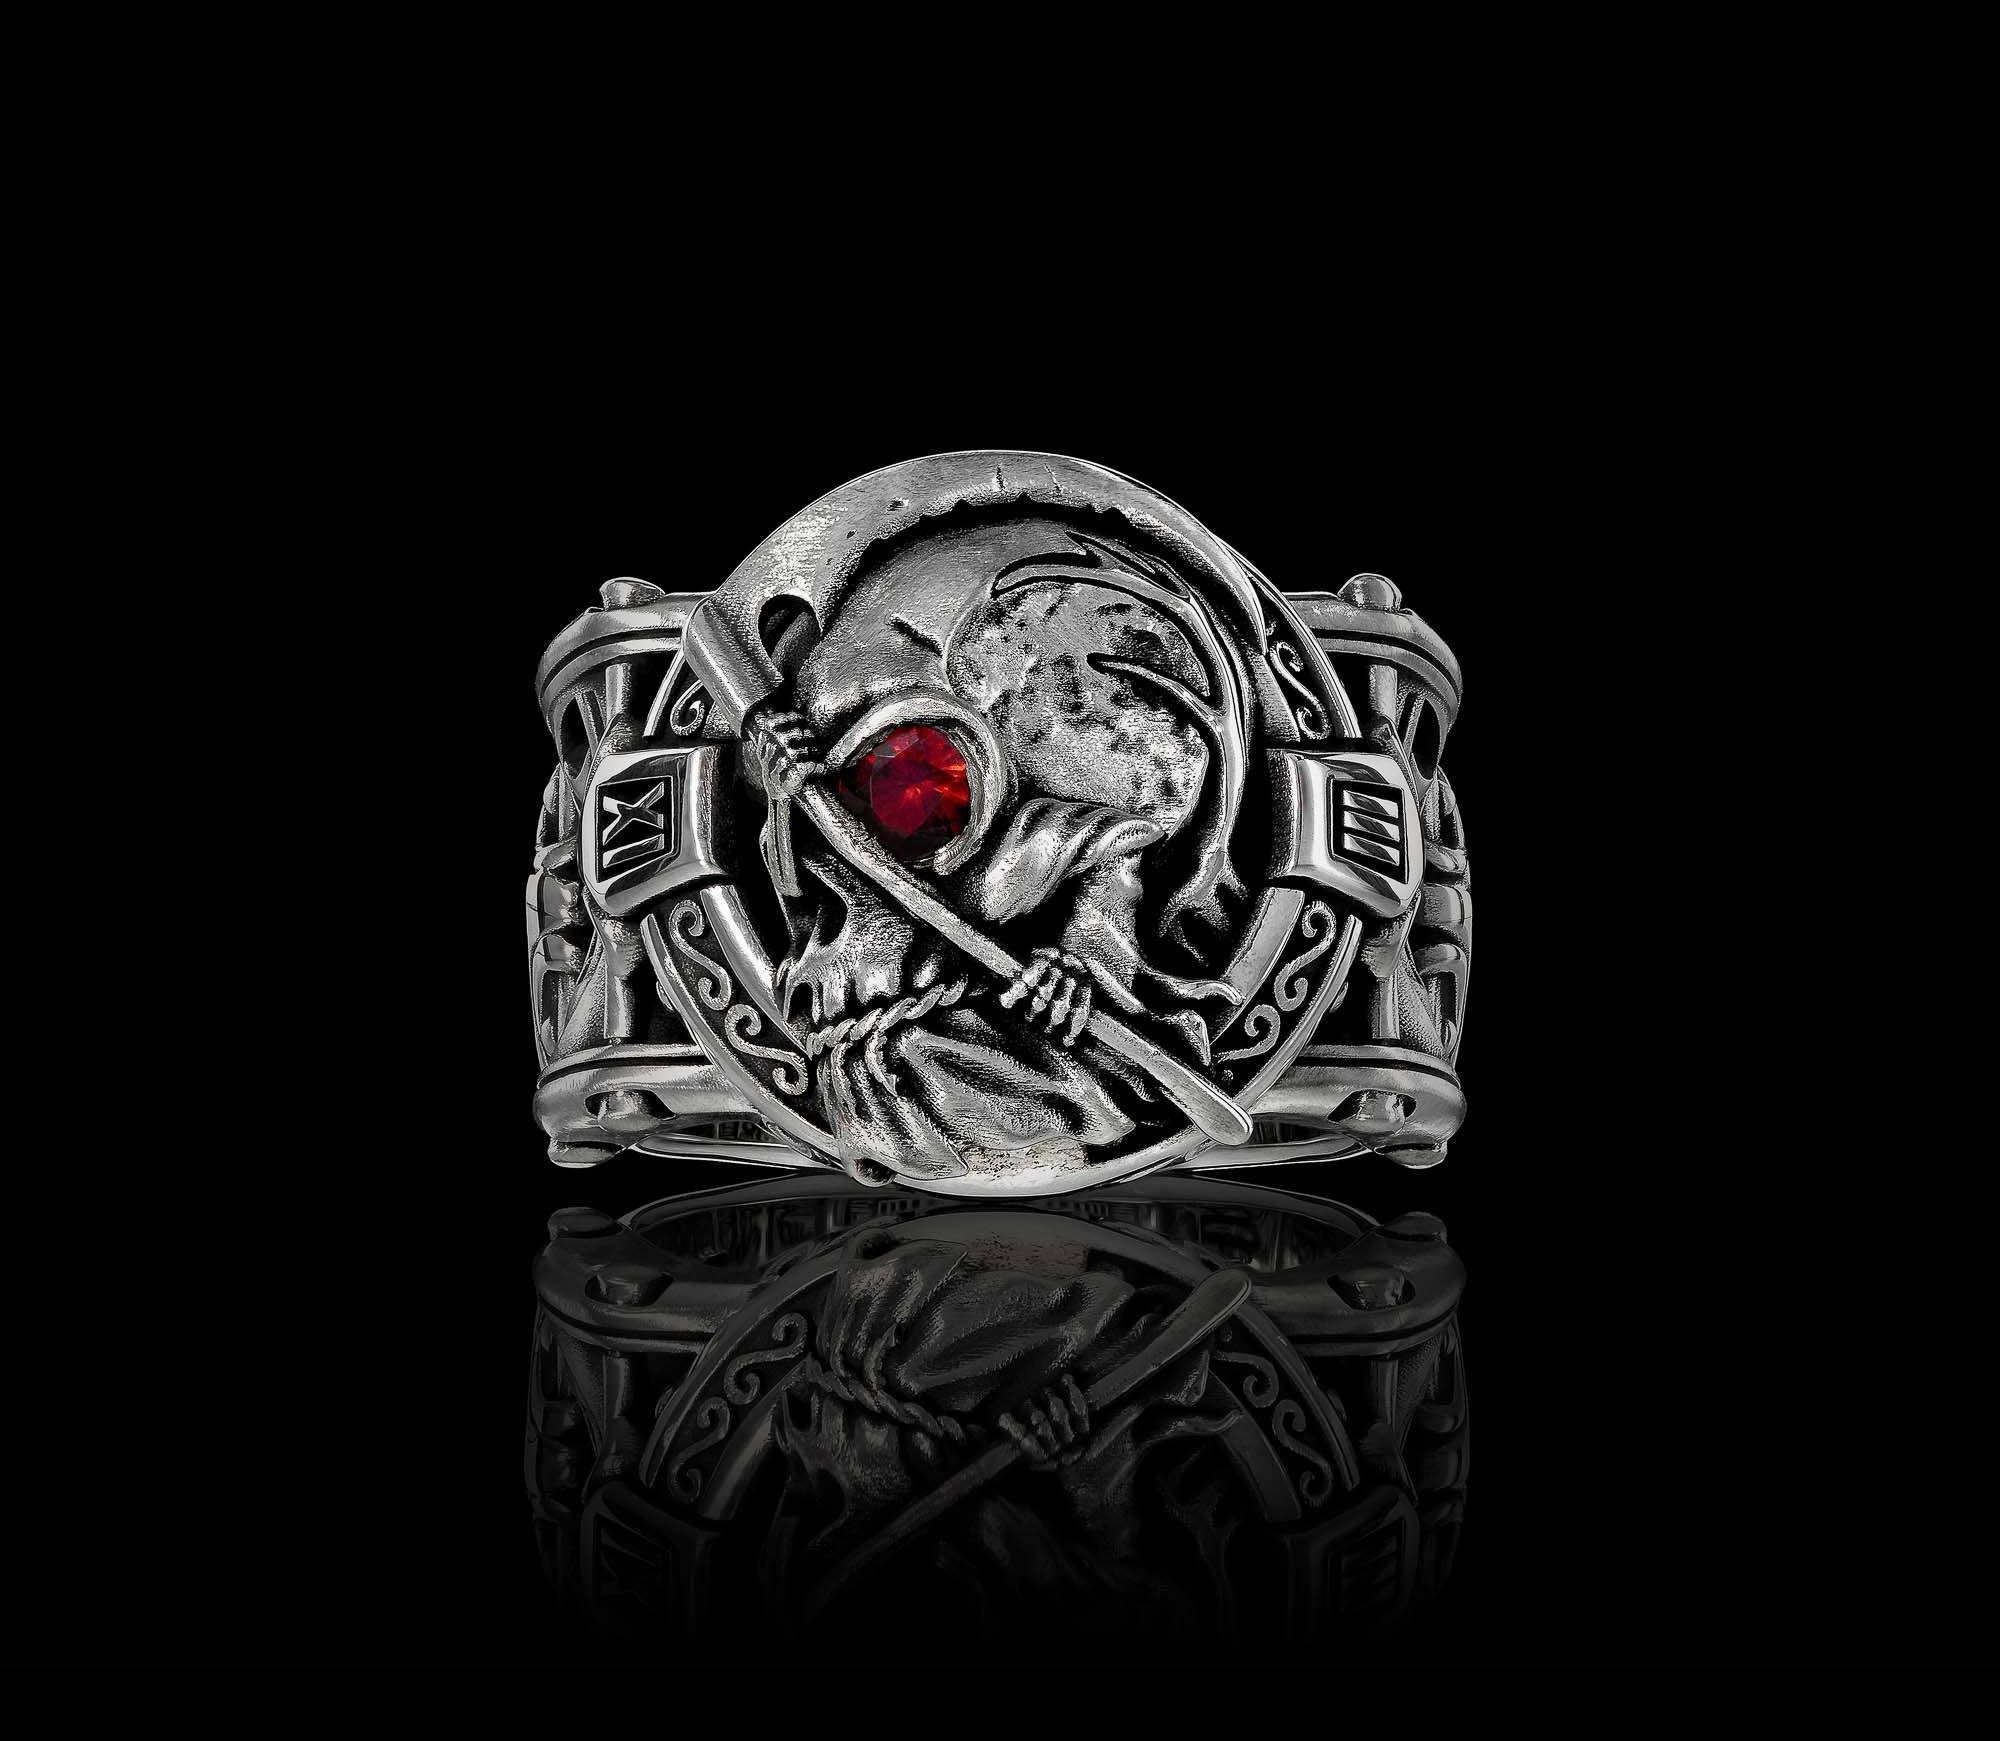 Reckoning Grim Reaper Ring in Sterling Silver with Red Garnet Gemstone